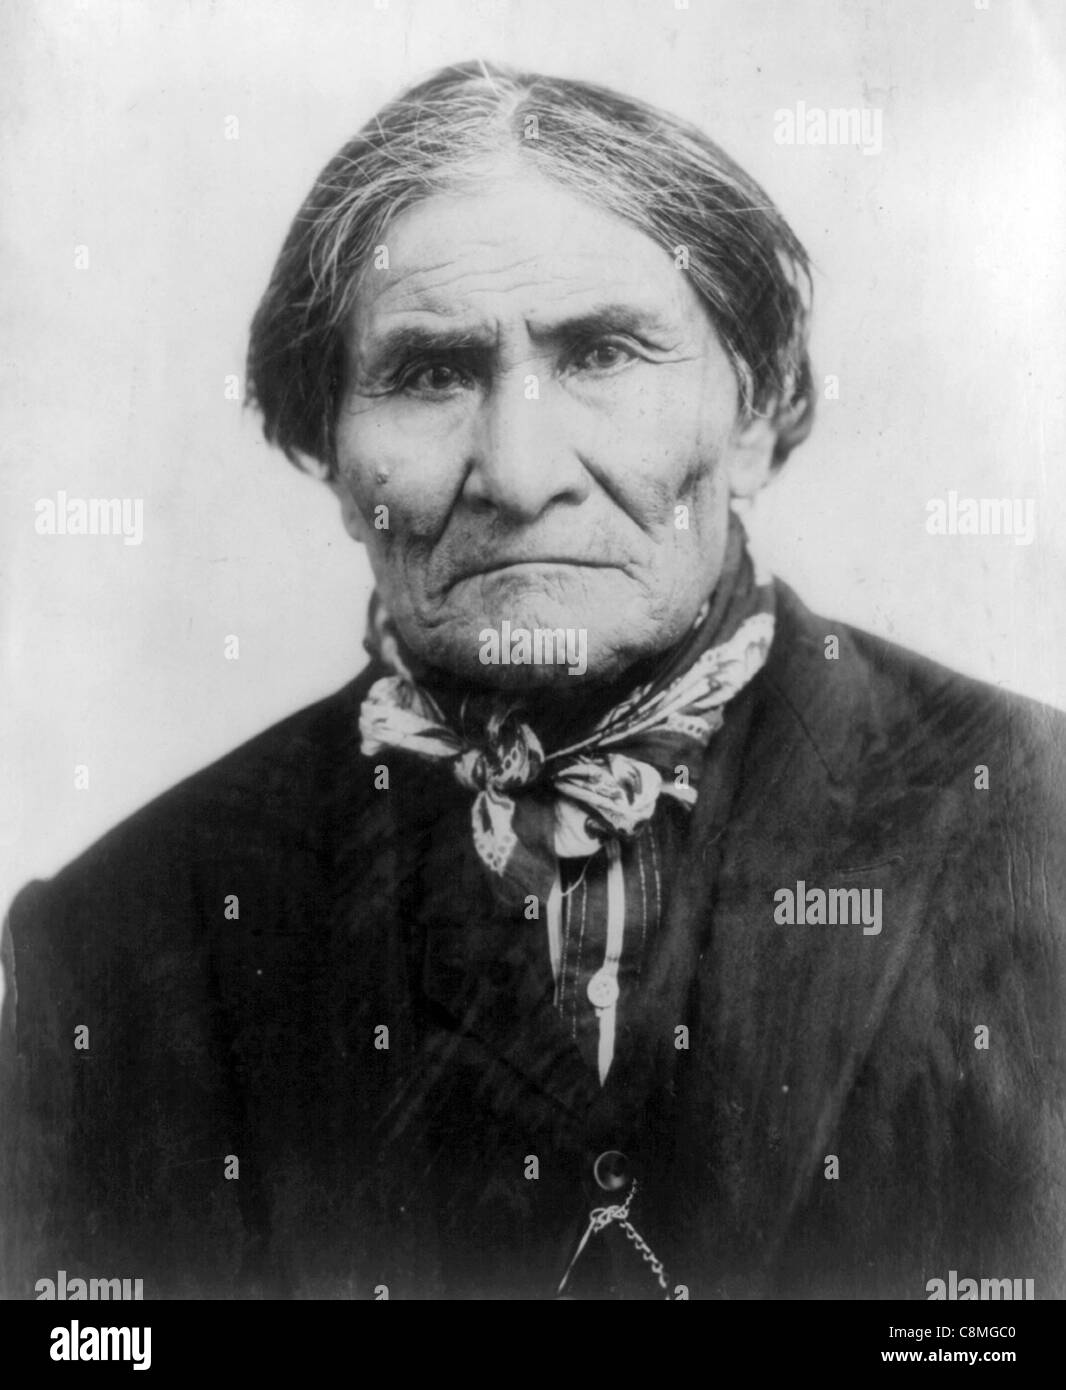 Geronimo, Native "American Indian" Geronimo Stockfoto